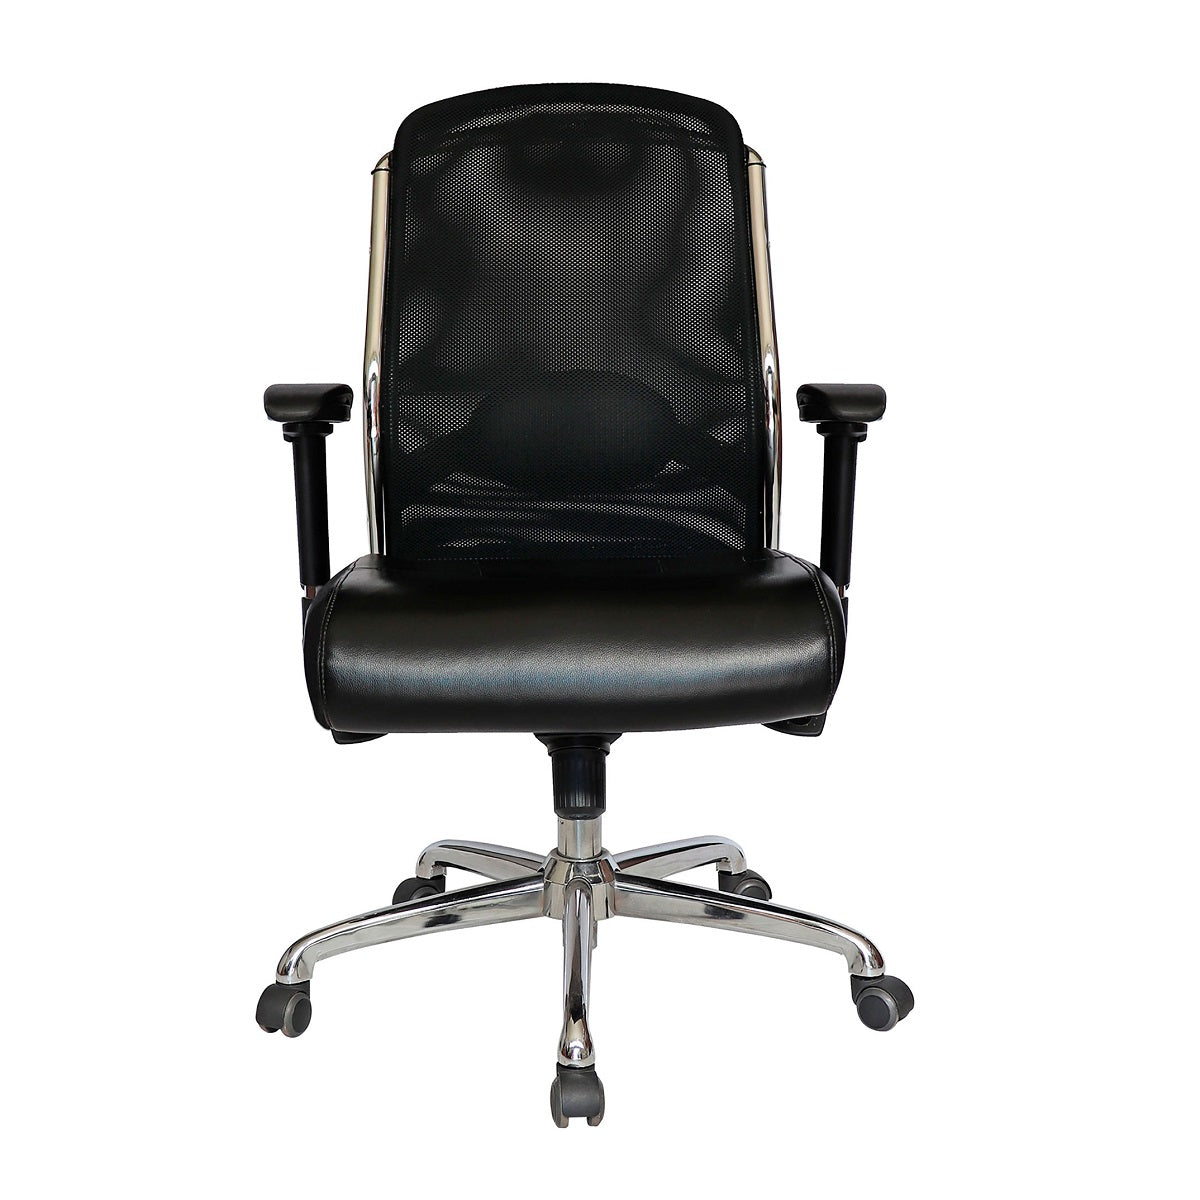 Sillón ejecutivo OHE-193 bajo respaldo tapizado en malla y asiento en tela negro con base cromo